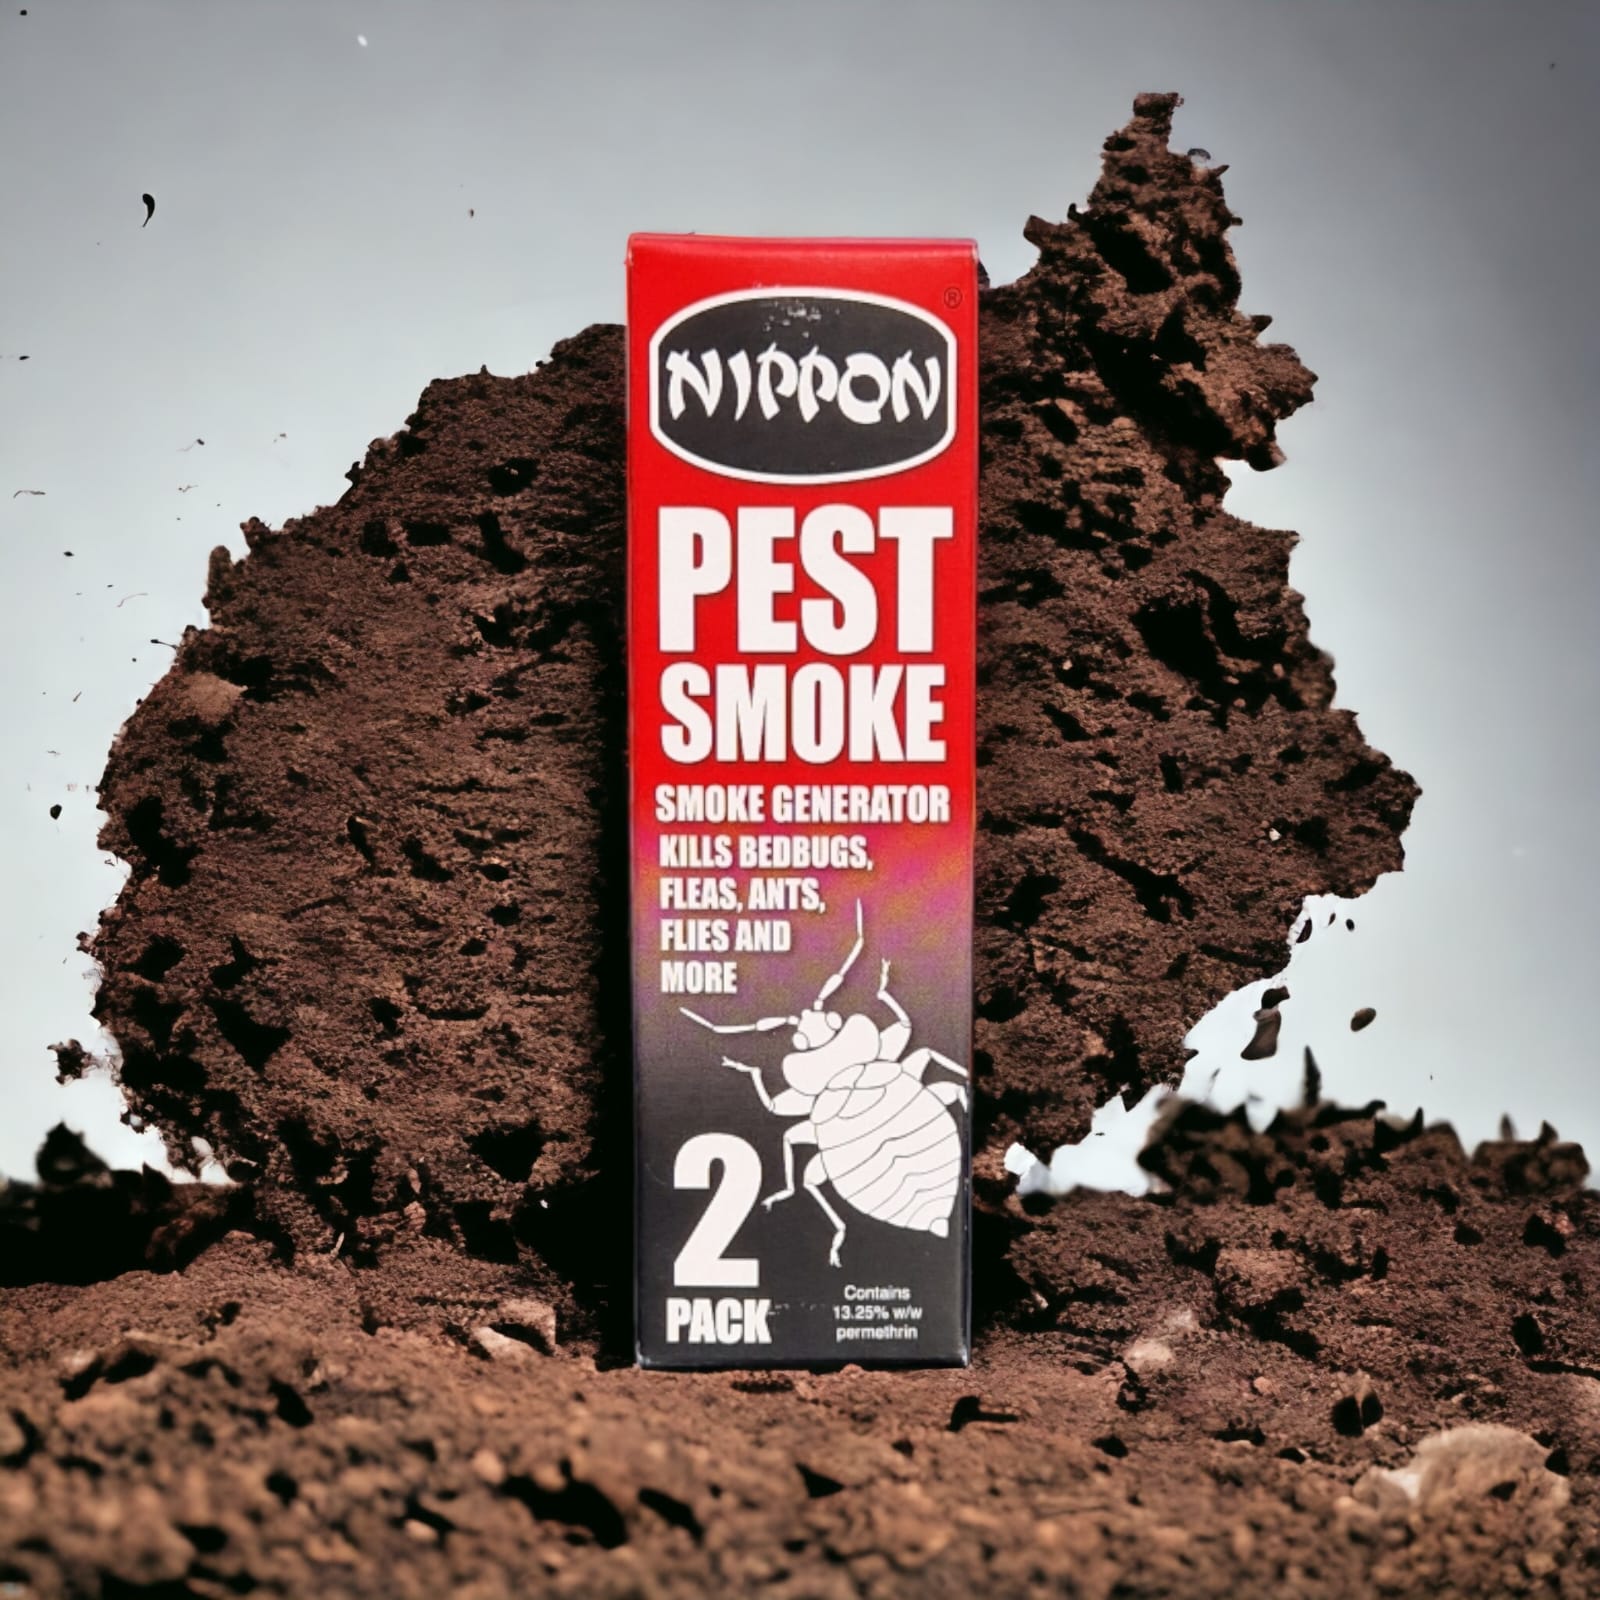 Nippon Pest Smoke Fumigator: Kills Bedbugs, Fleas, Ants & Flies